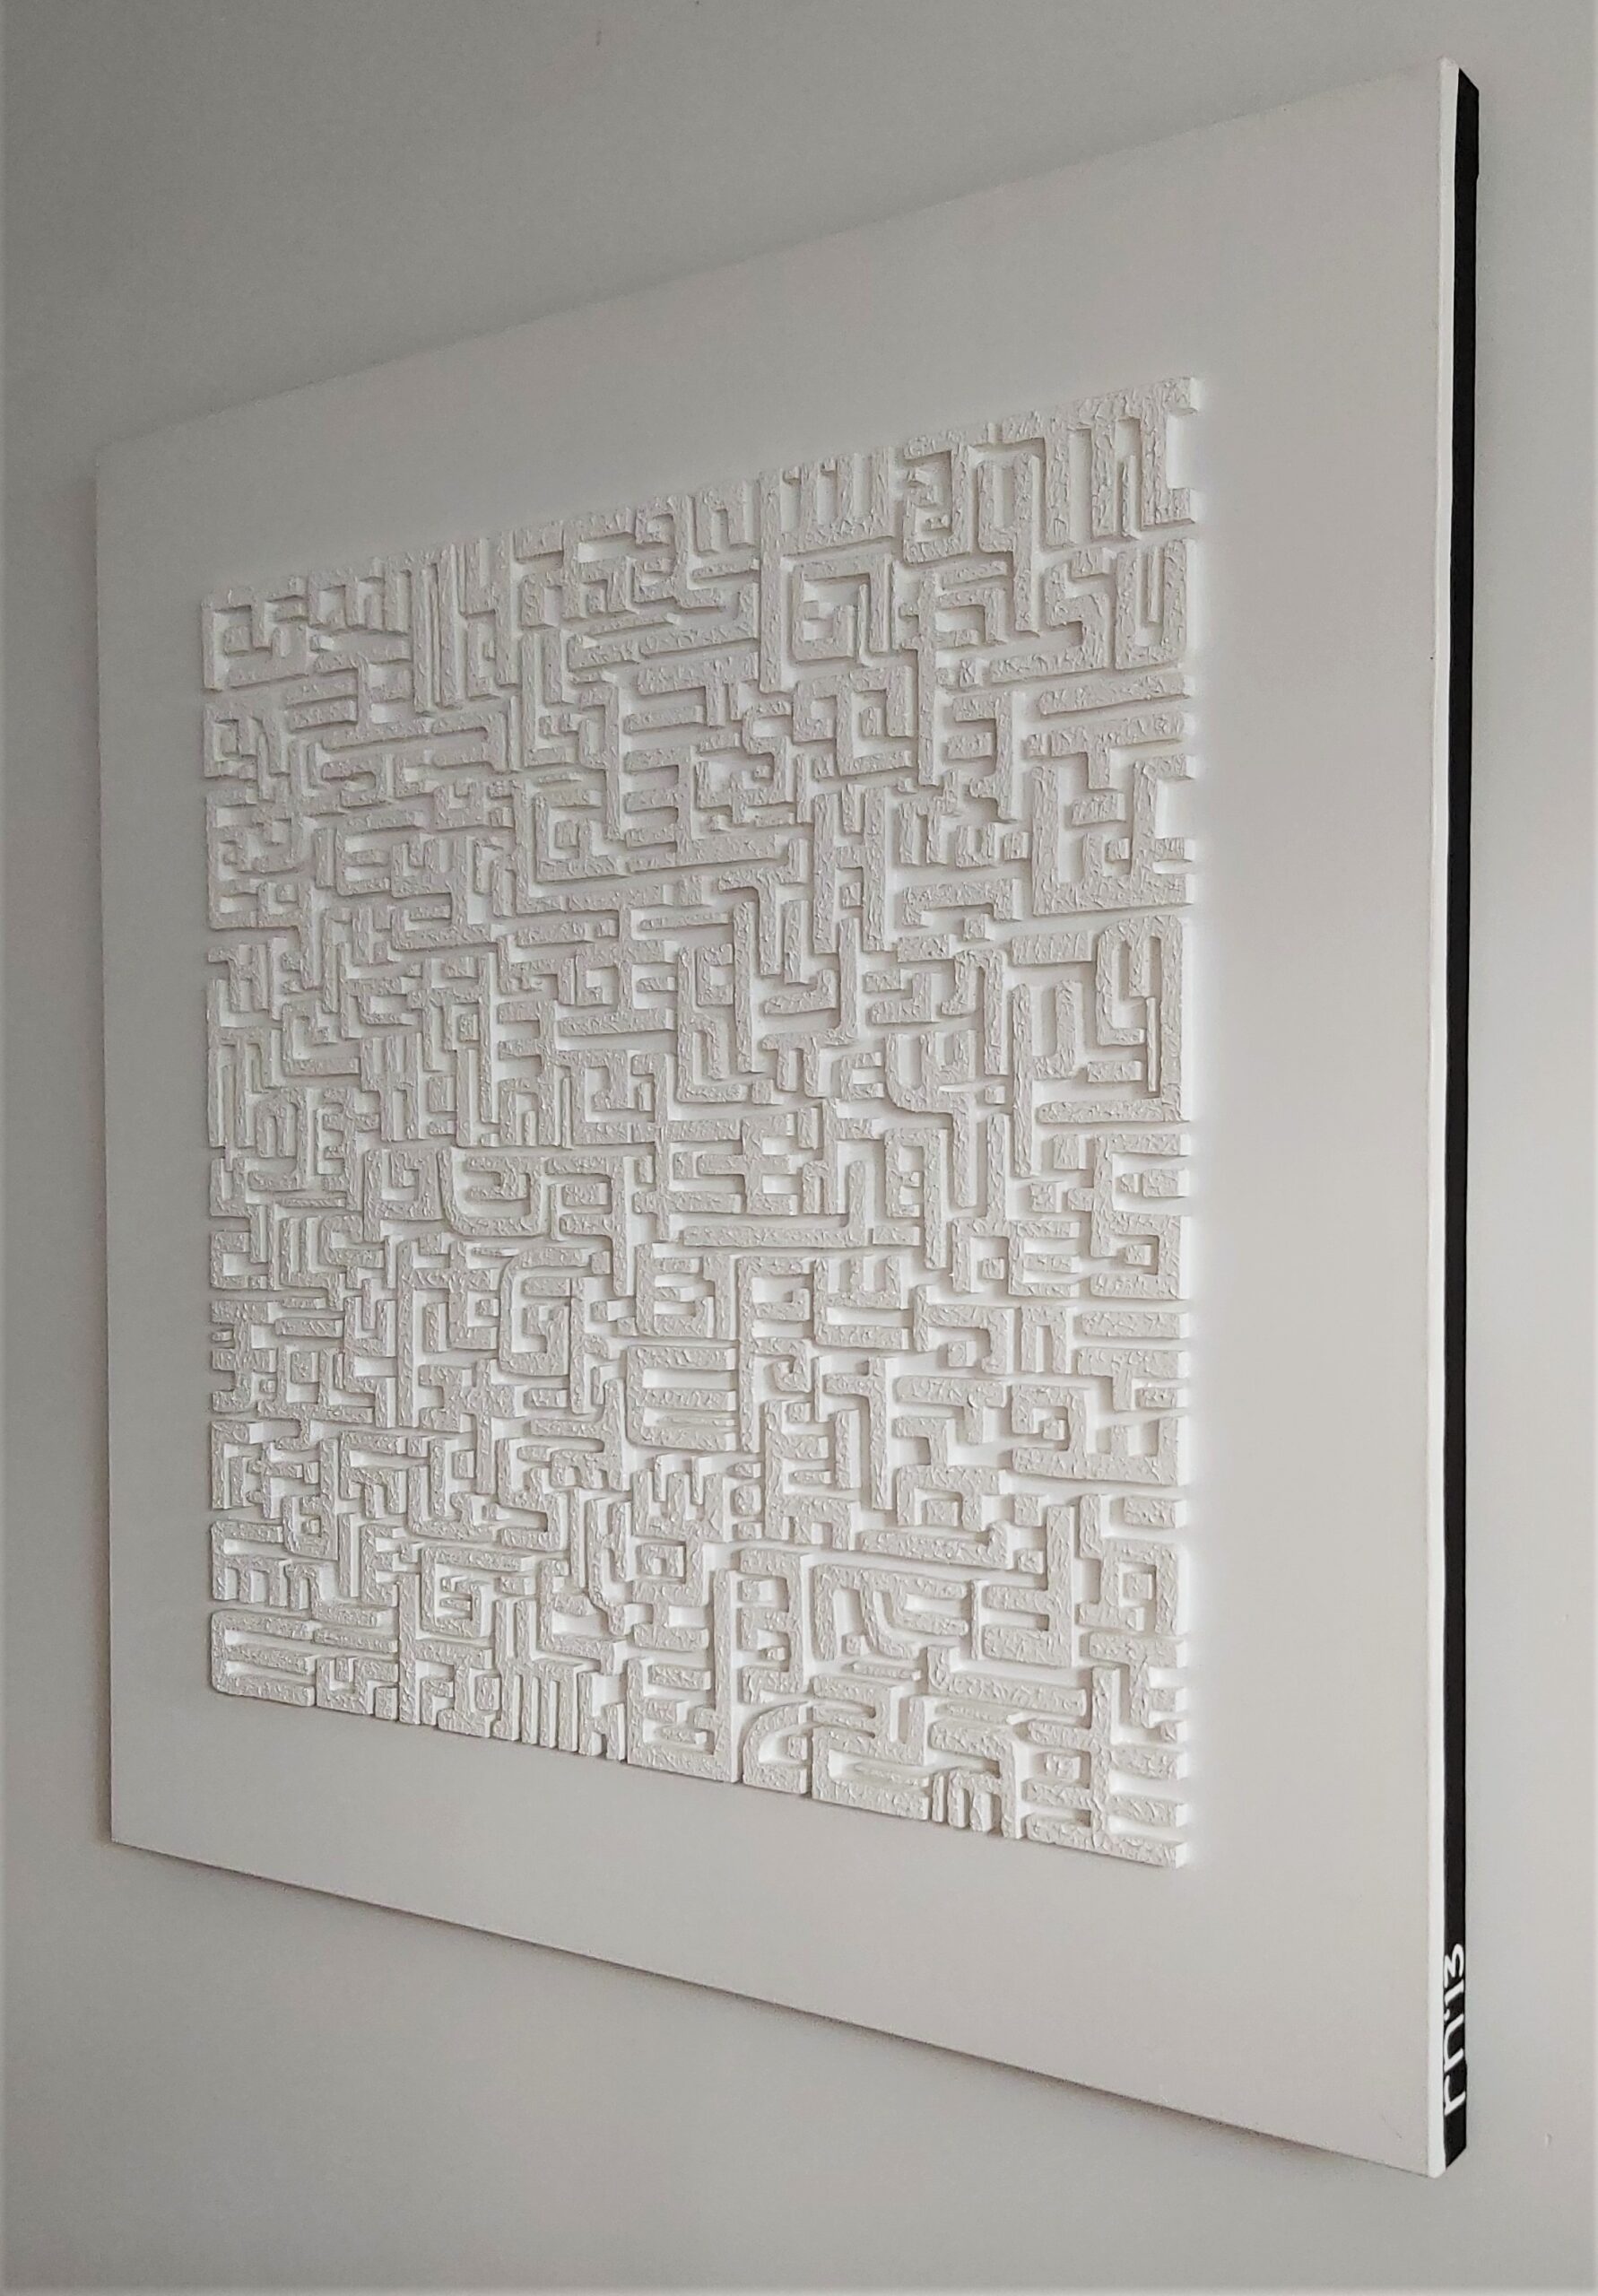 Lost, polystyrene sculpture on canvas by Richard Noel artist